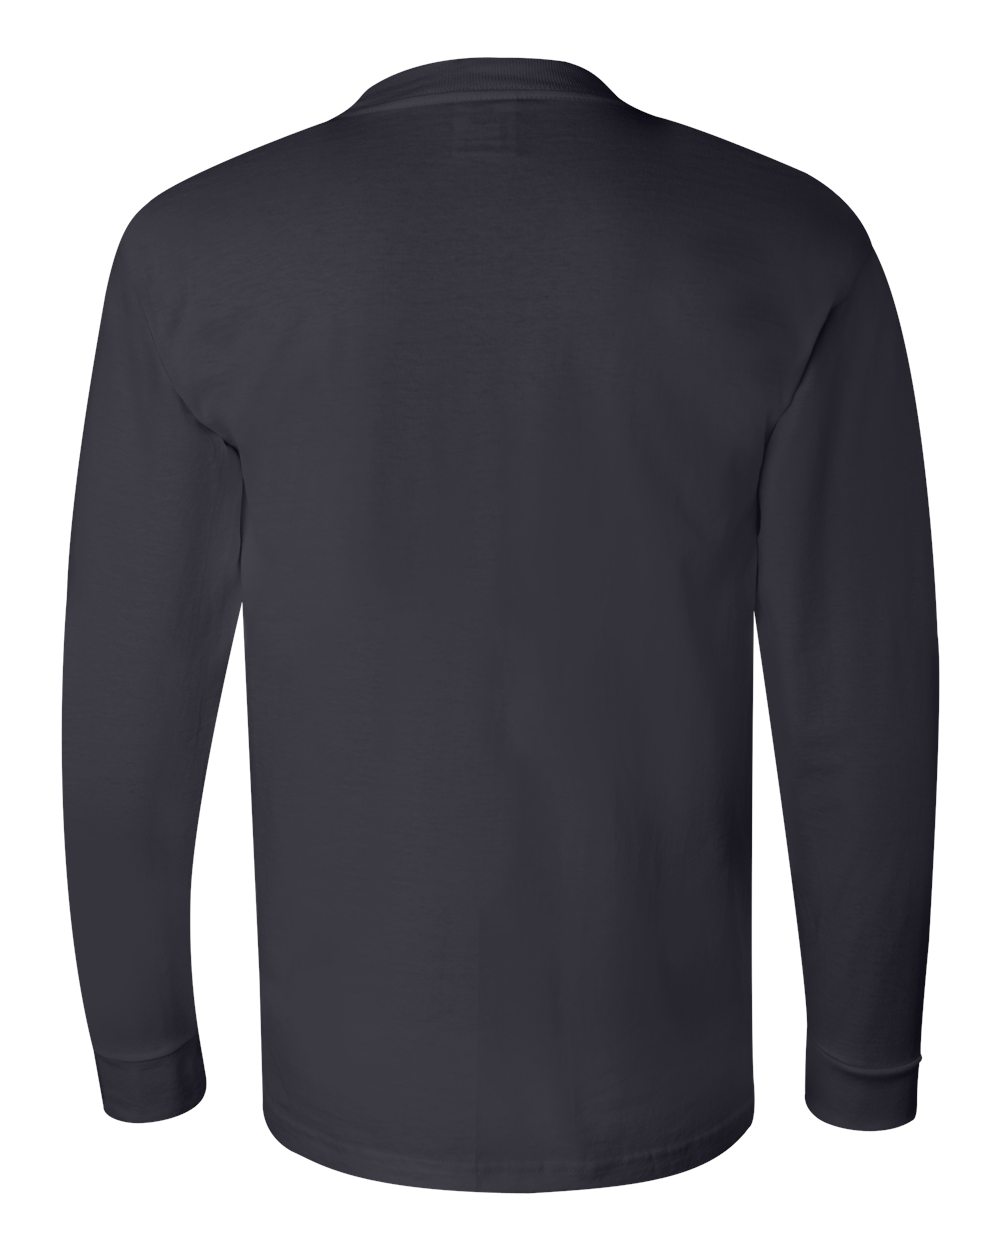 USA-Made Long Sleeve T-Shirt back view